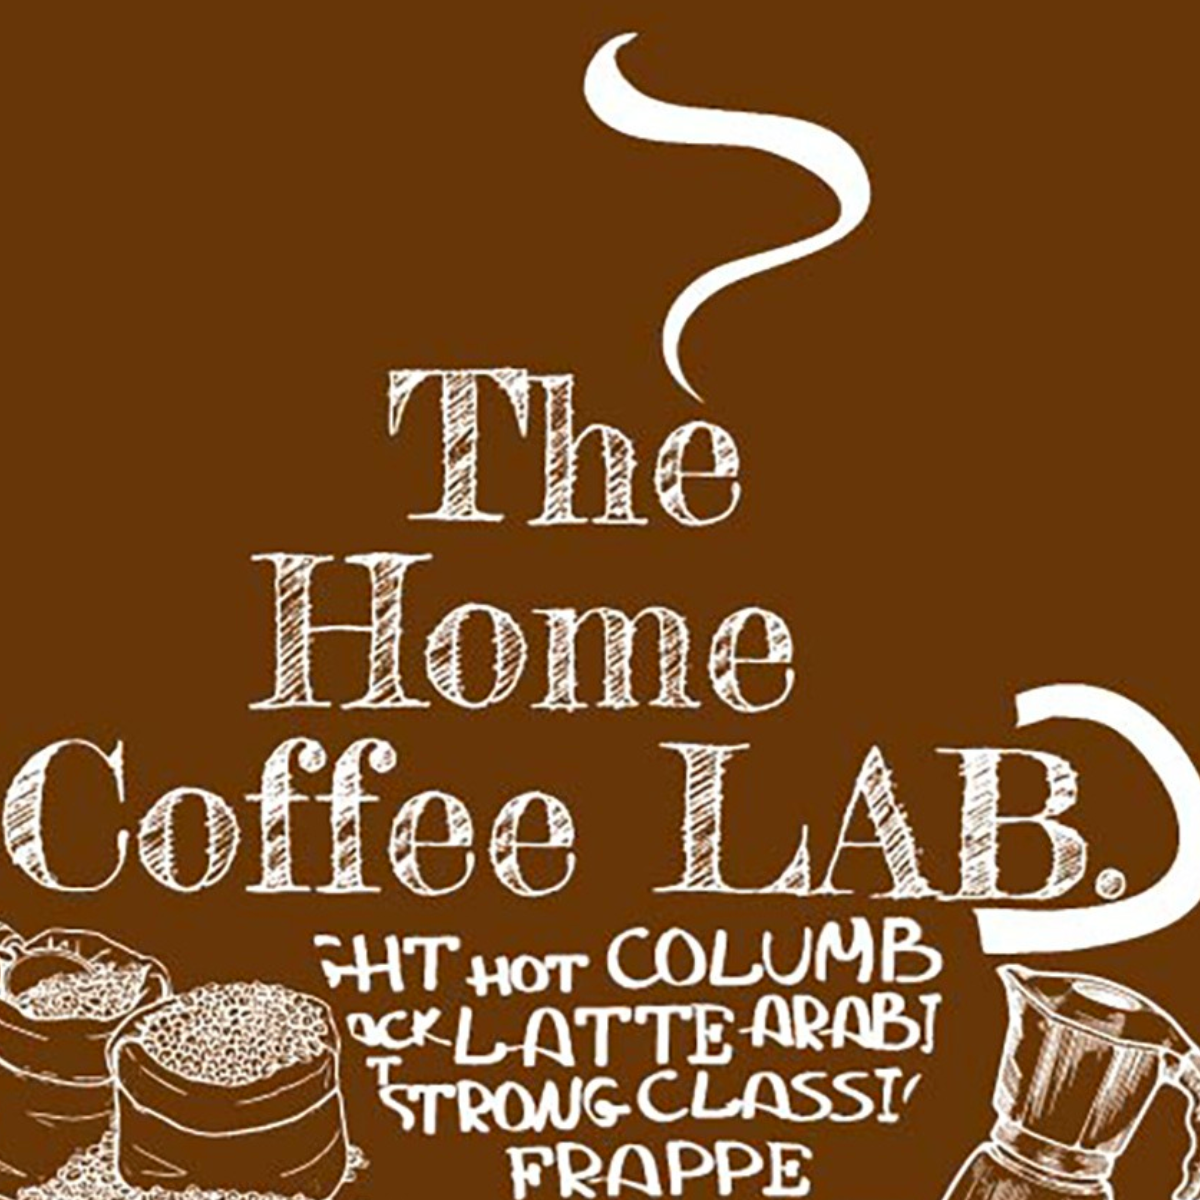 The Home Coffee Lab